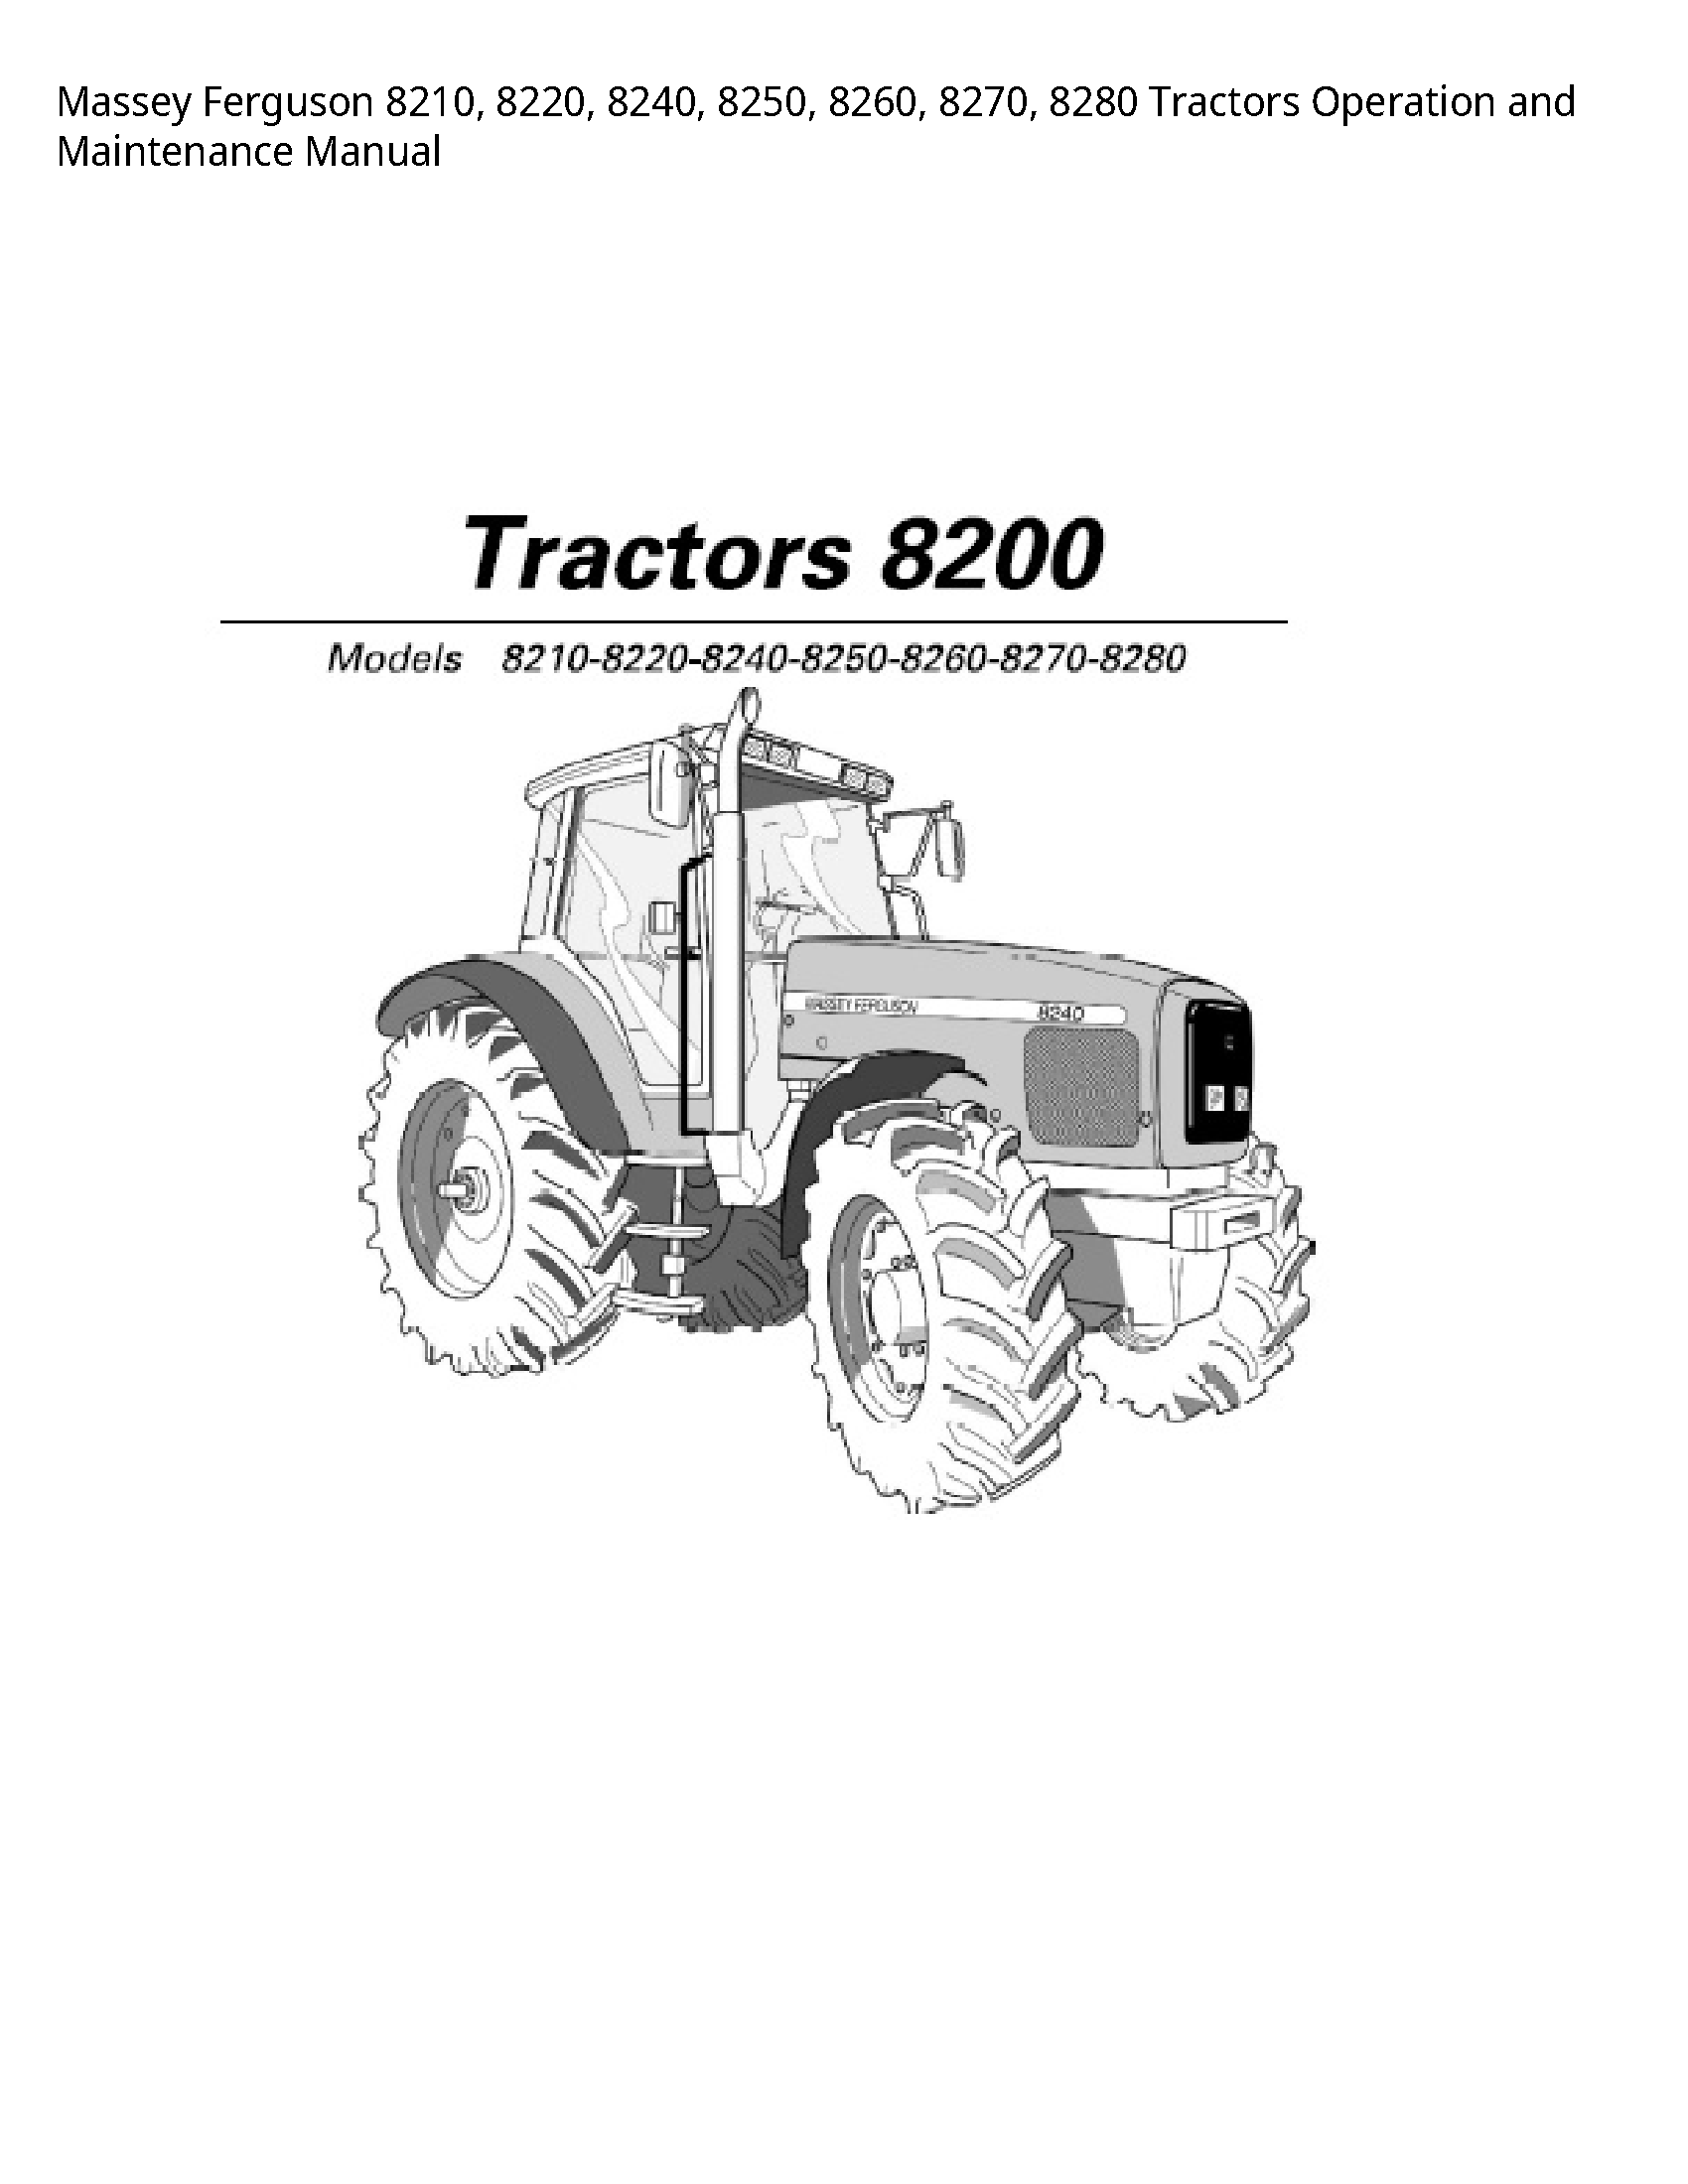 Massey Ferguson 8210 Tractors Operation  Maintenance manual